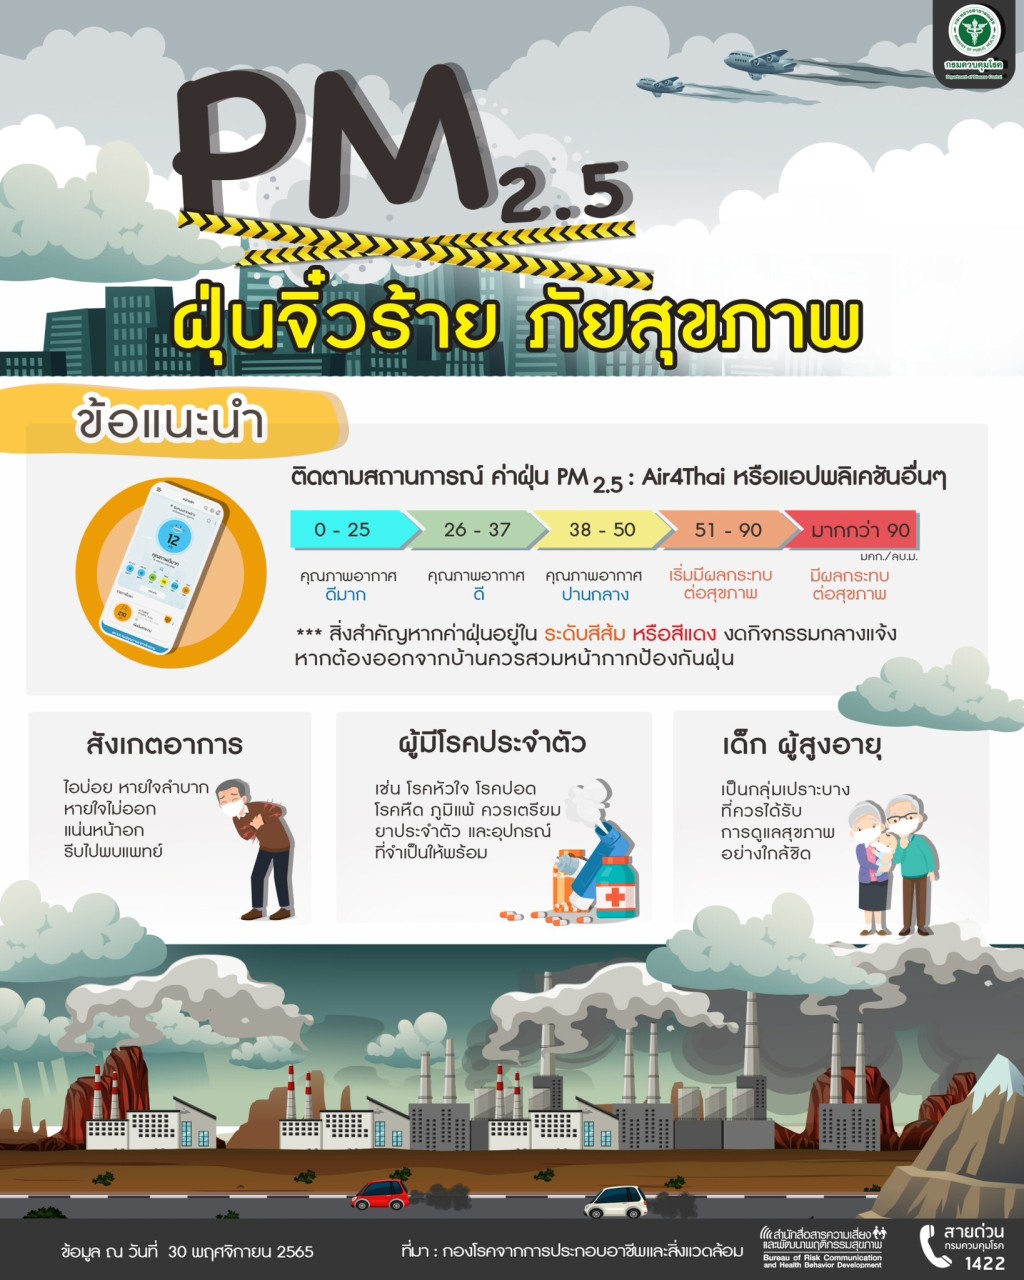 PM 2.5 ฝุ่นจิ๋วร้าย ภัยสุขภาพ